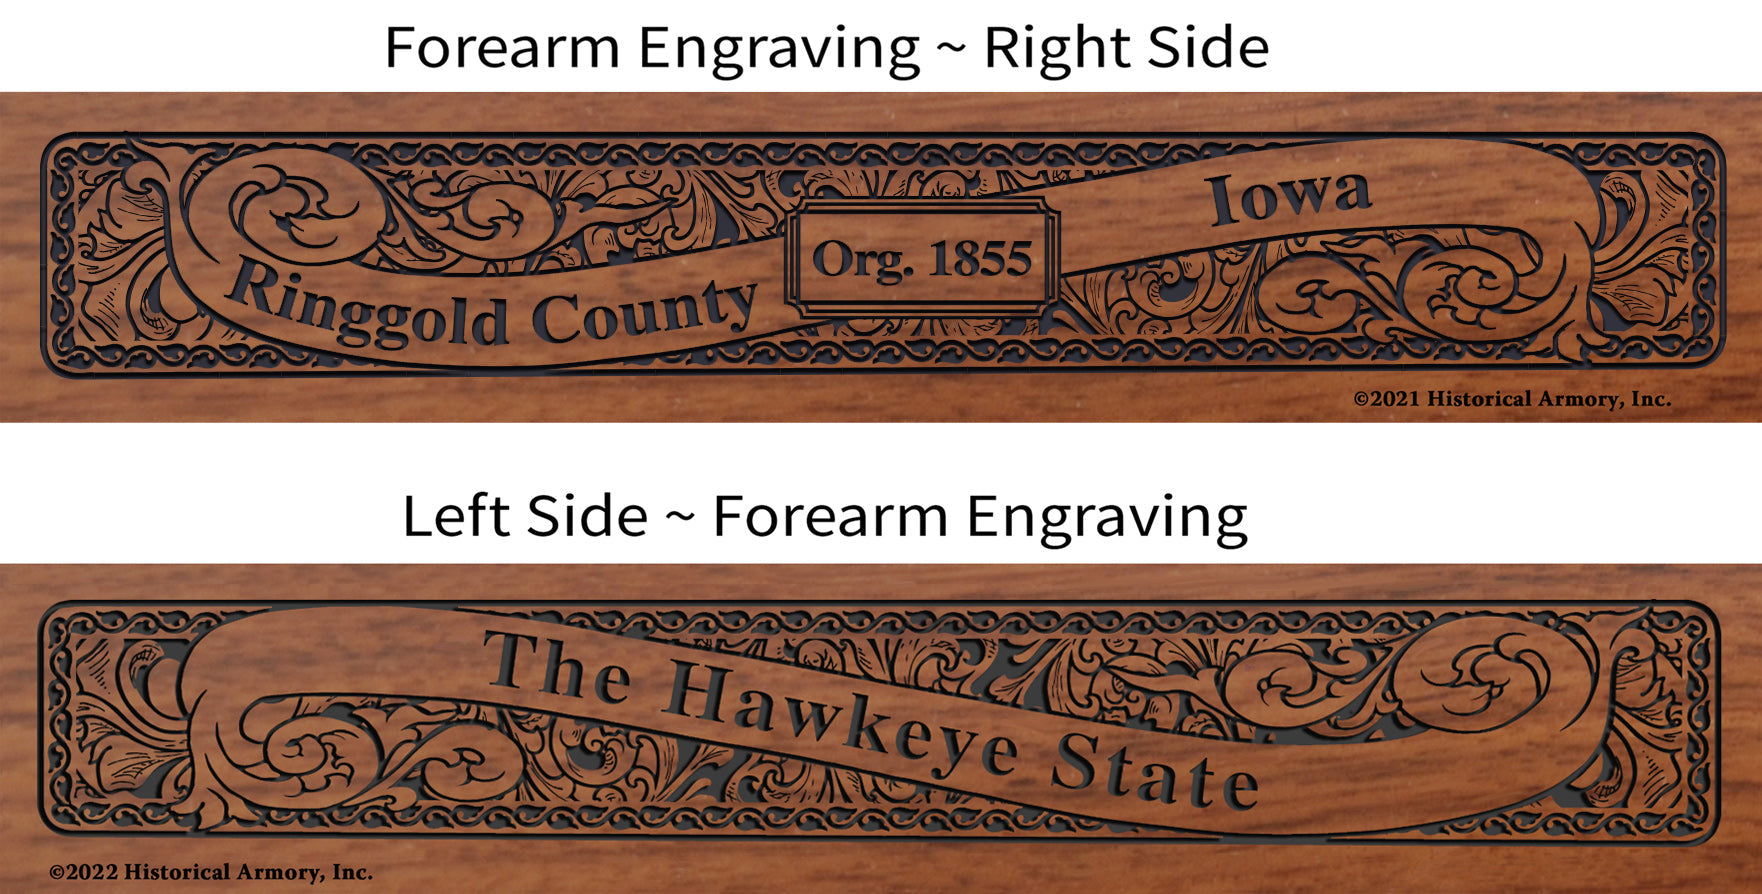 Ringgold County Iowa Engraved Rifle Forearm